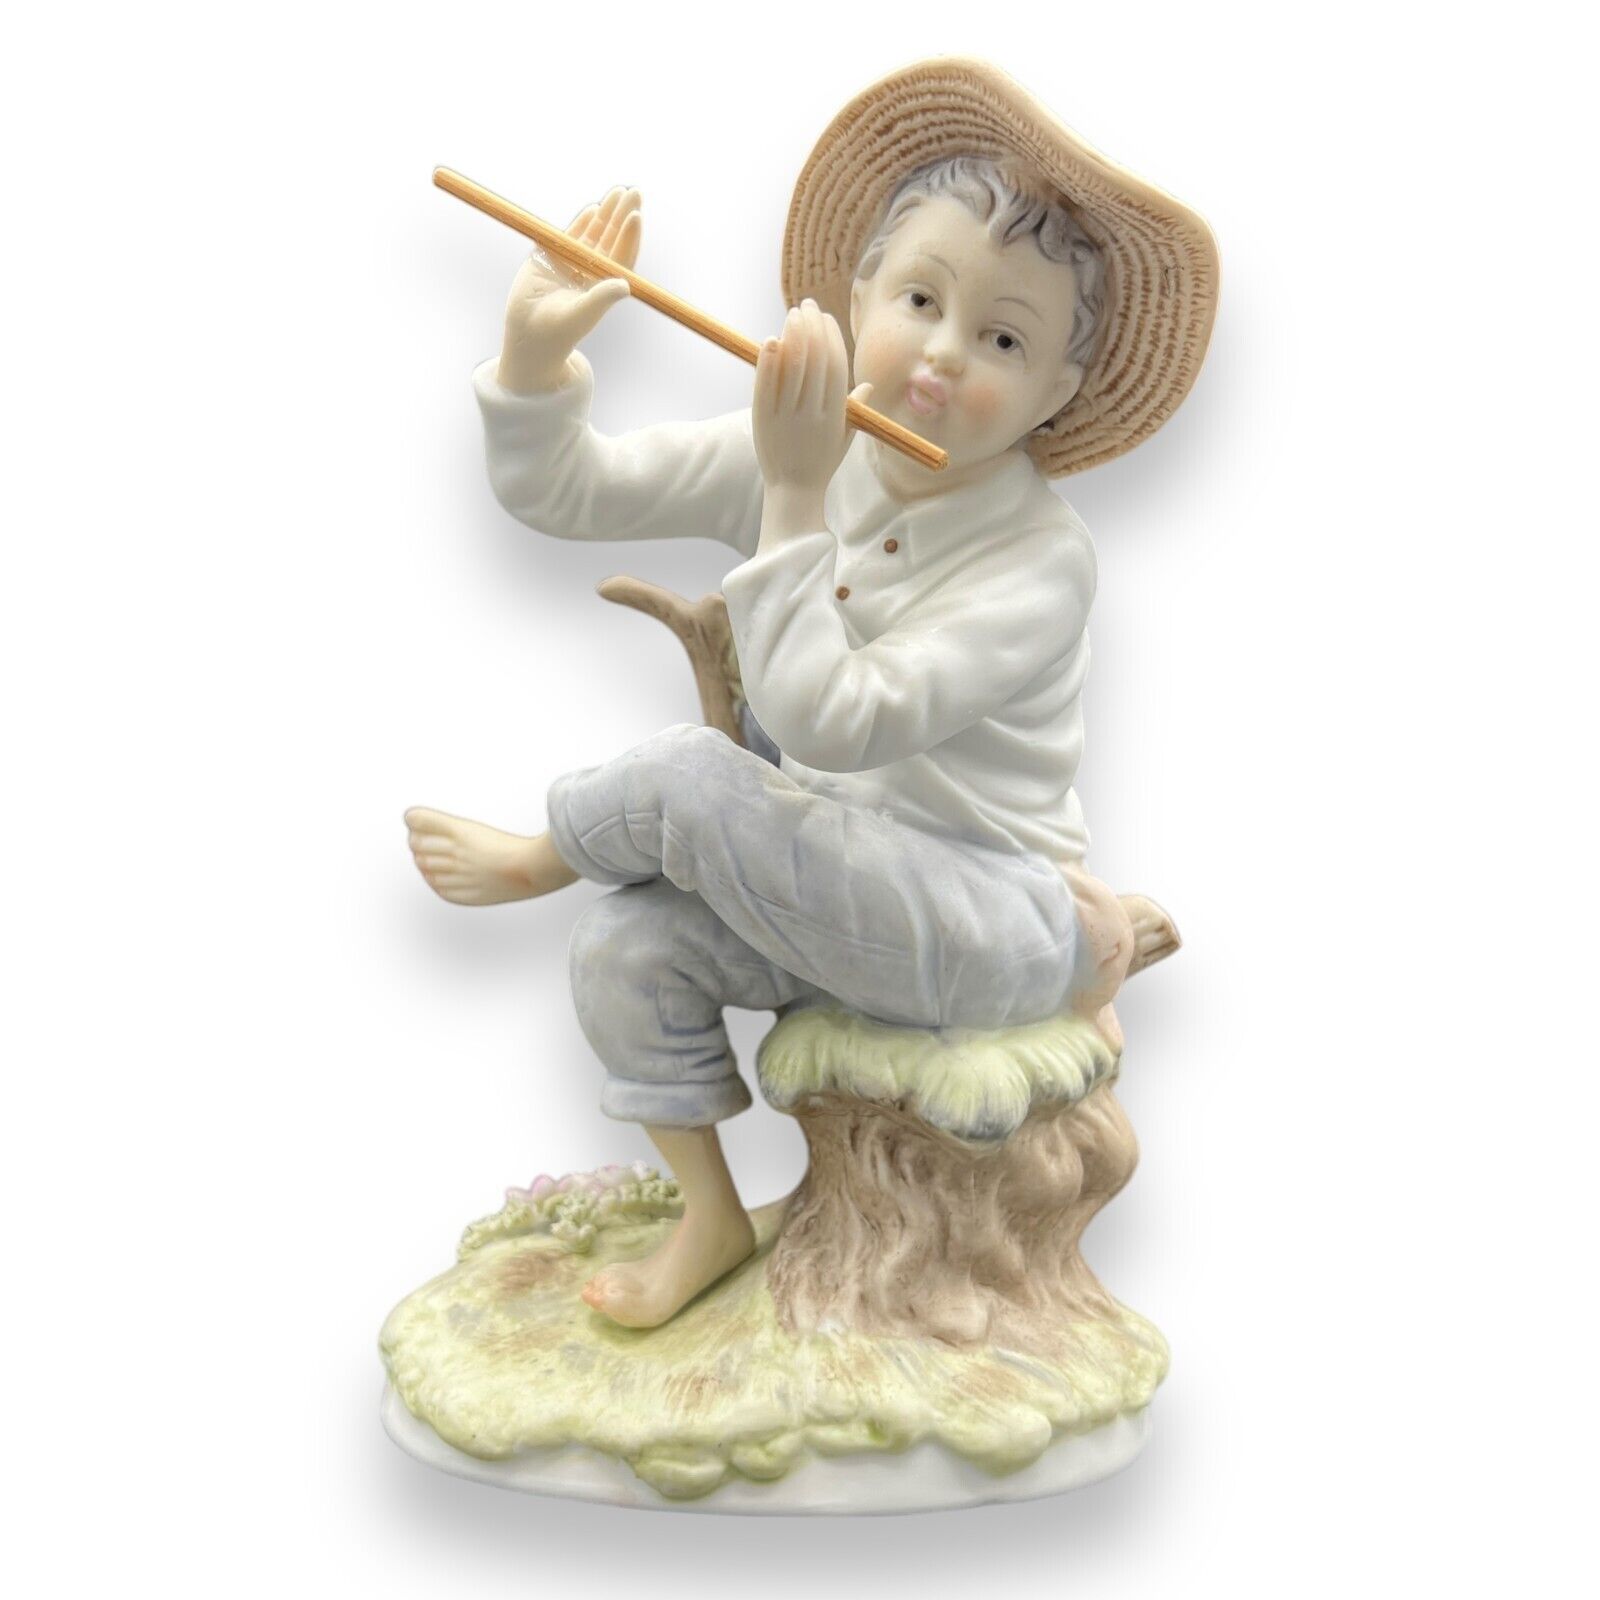 LEFTON China Hand Painted Porcelain Figurine KW 224 Boy Playing Flute Vintage